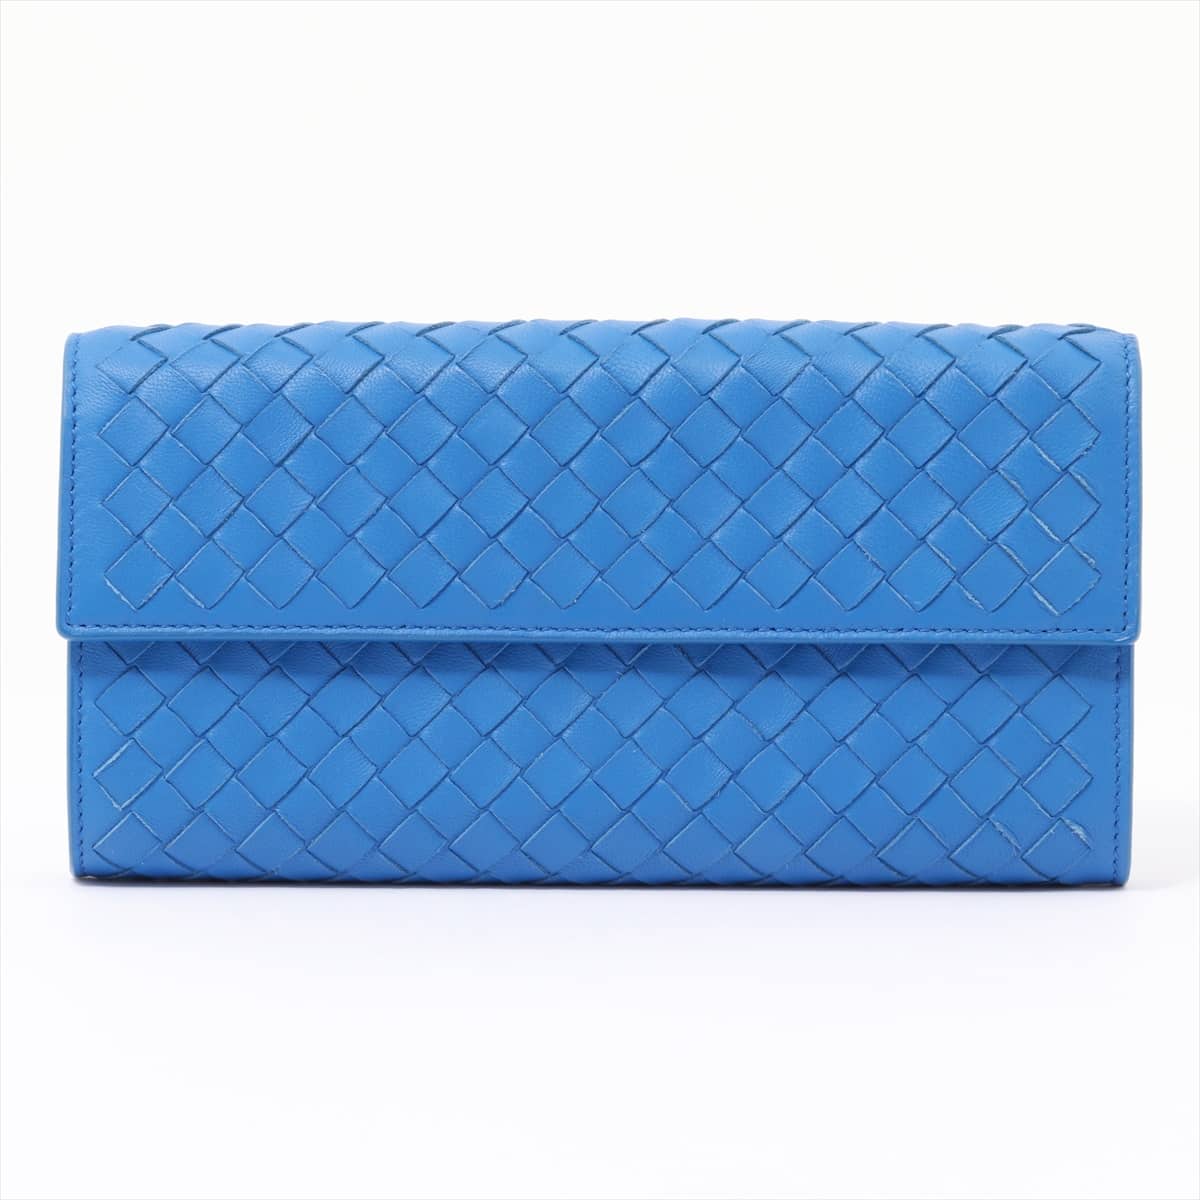 Bottega Veneta Intrecciato Leather Wallet Blue external thread